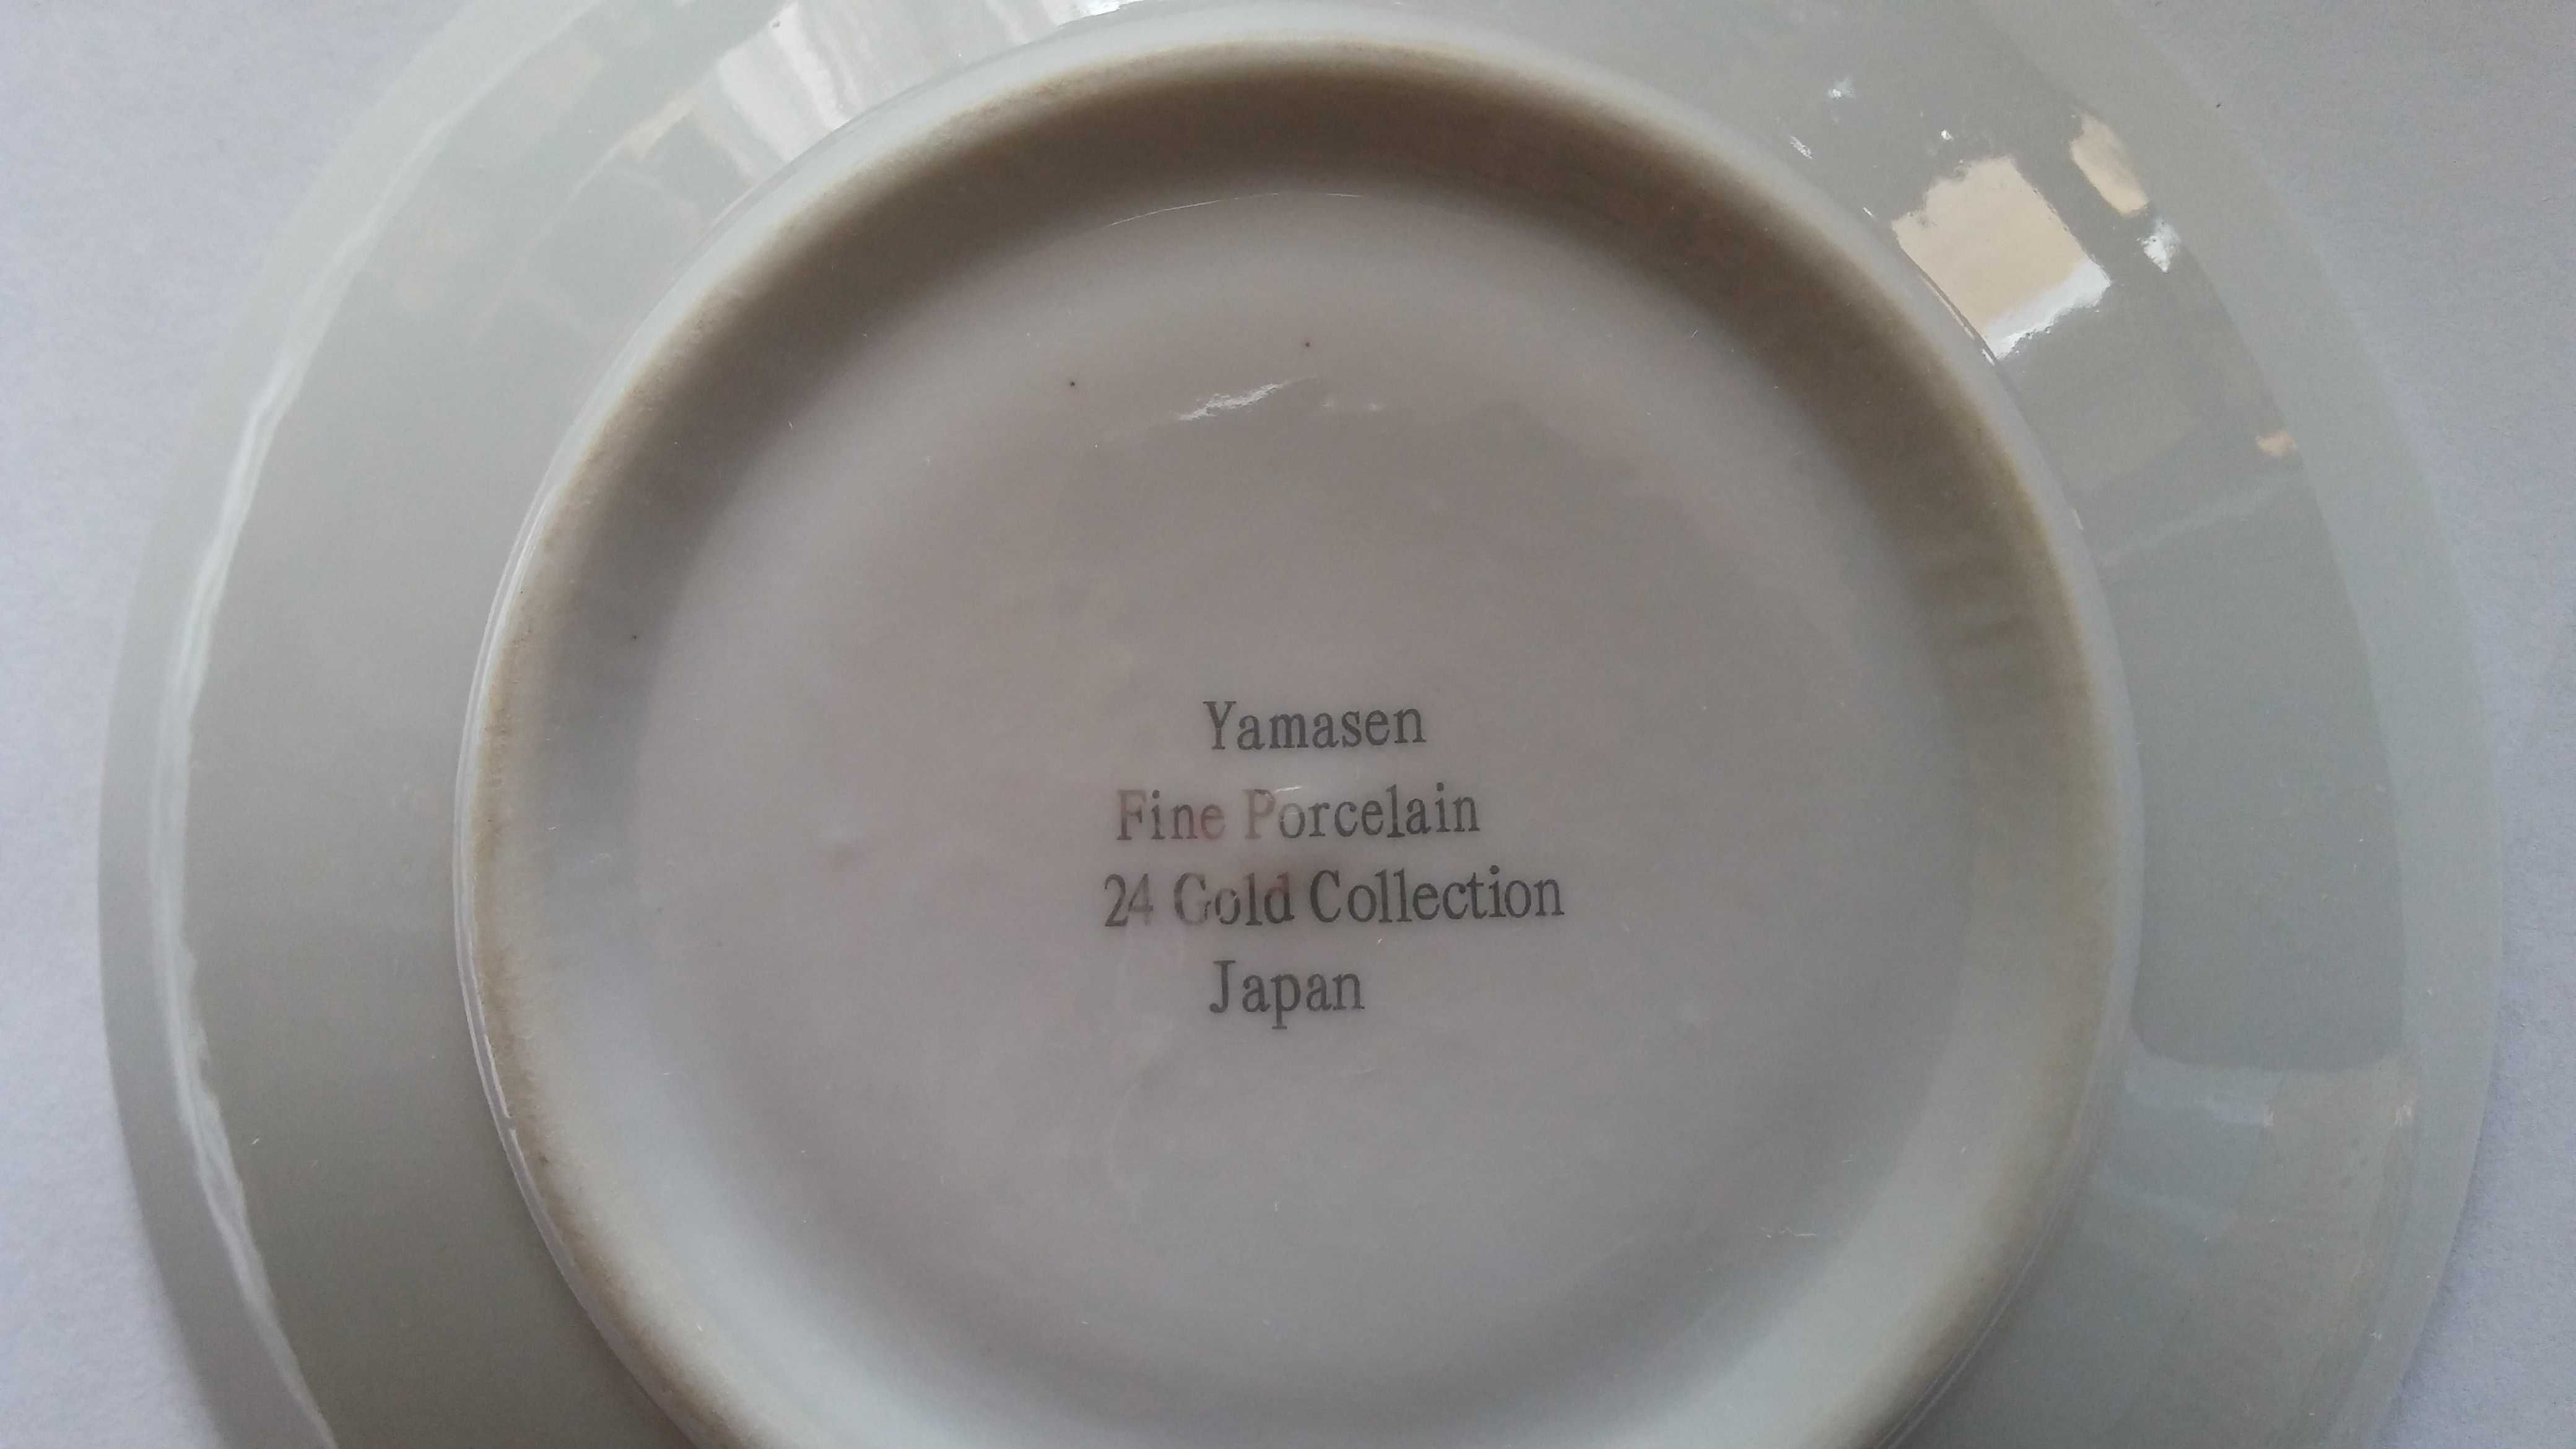 Filiżanka do kawy- Yamasen Fine Porcelain 24gold Collection Japan